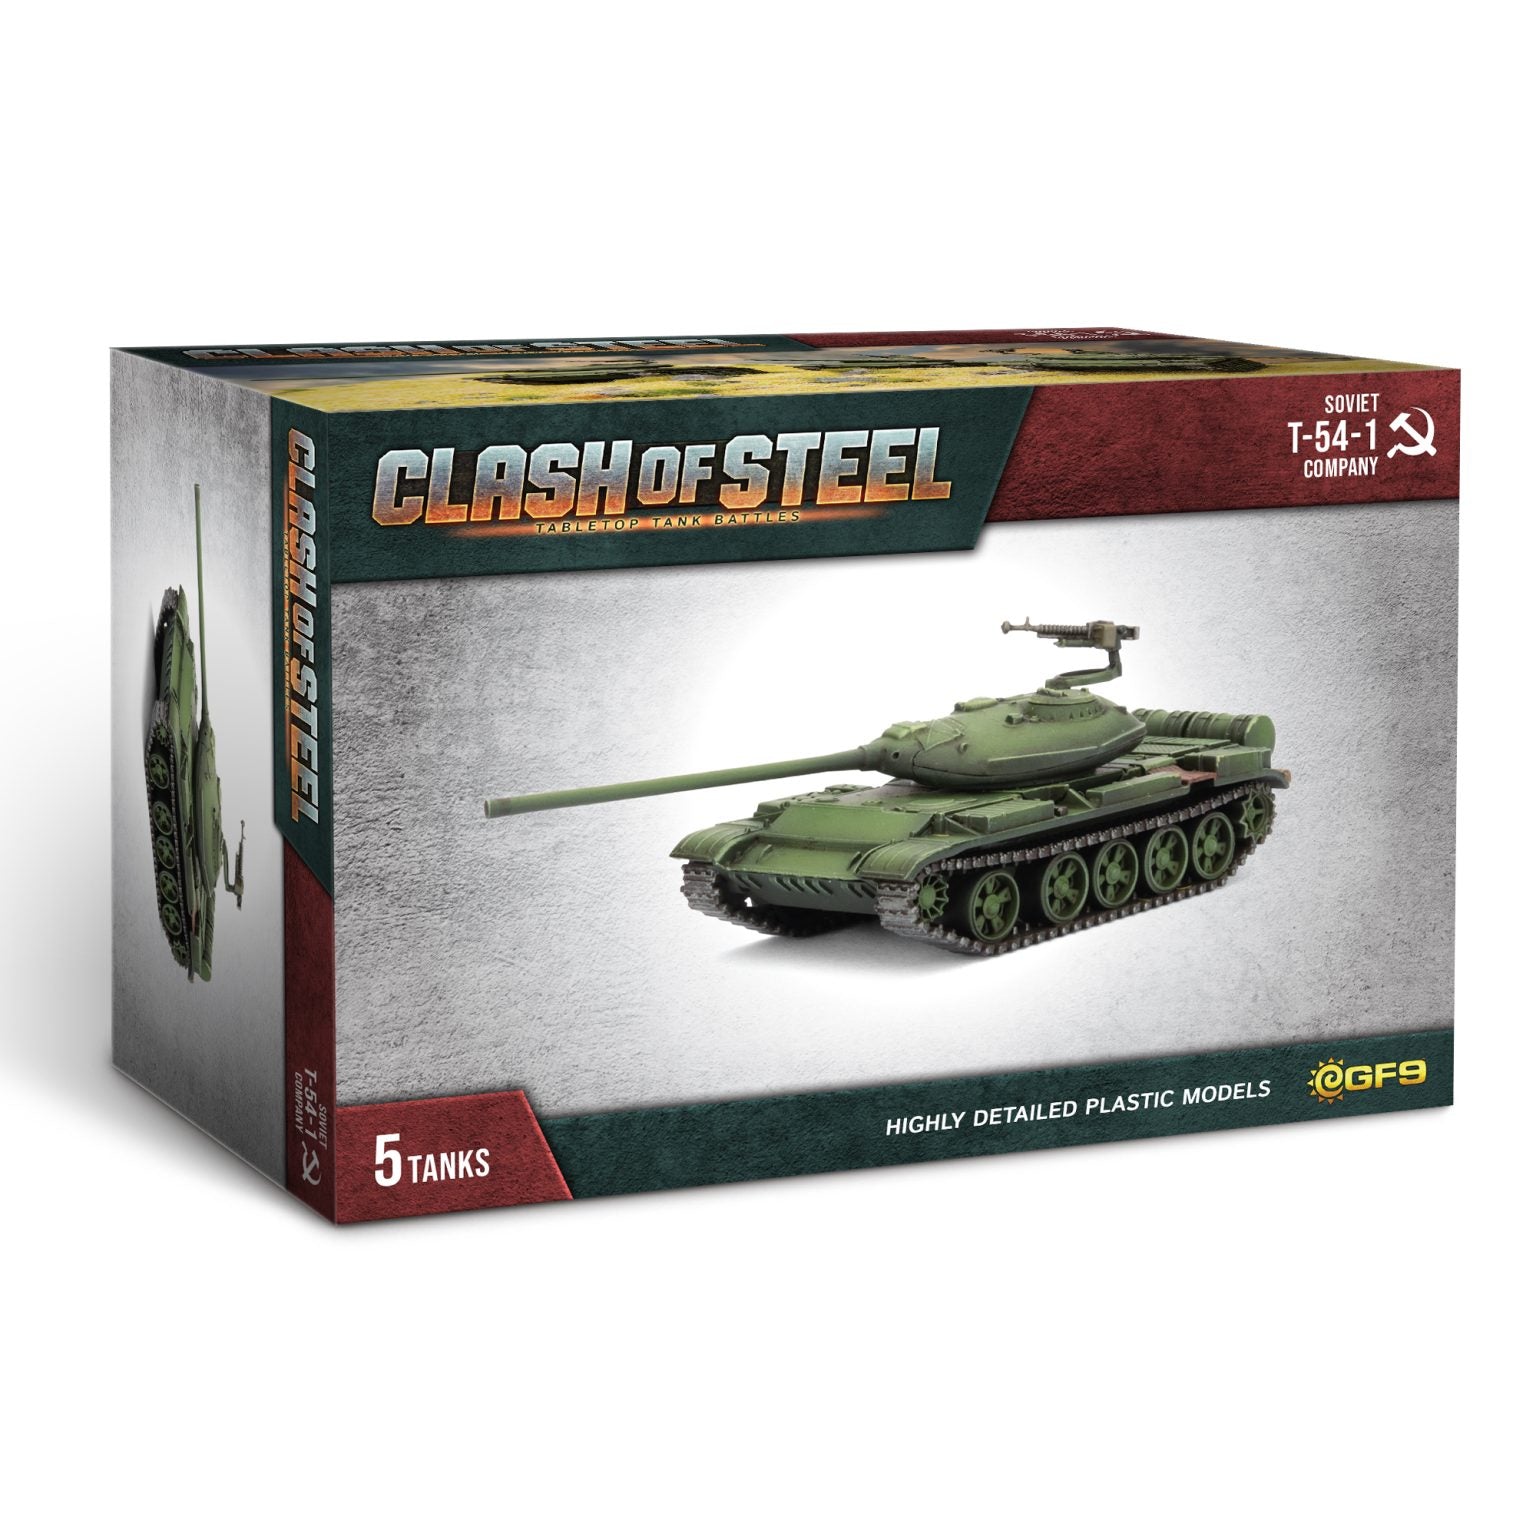 Clash of Steel: Soviet - T-54-1 Company | Grognard Games